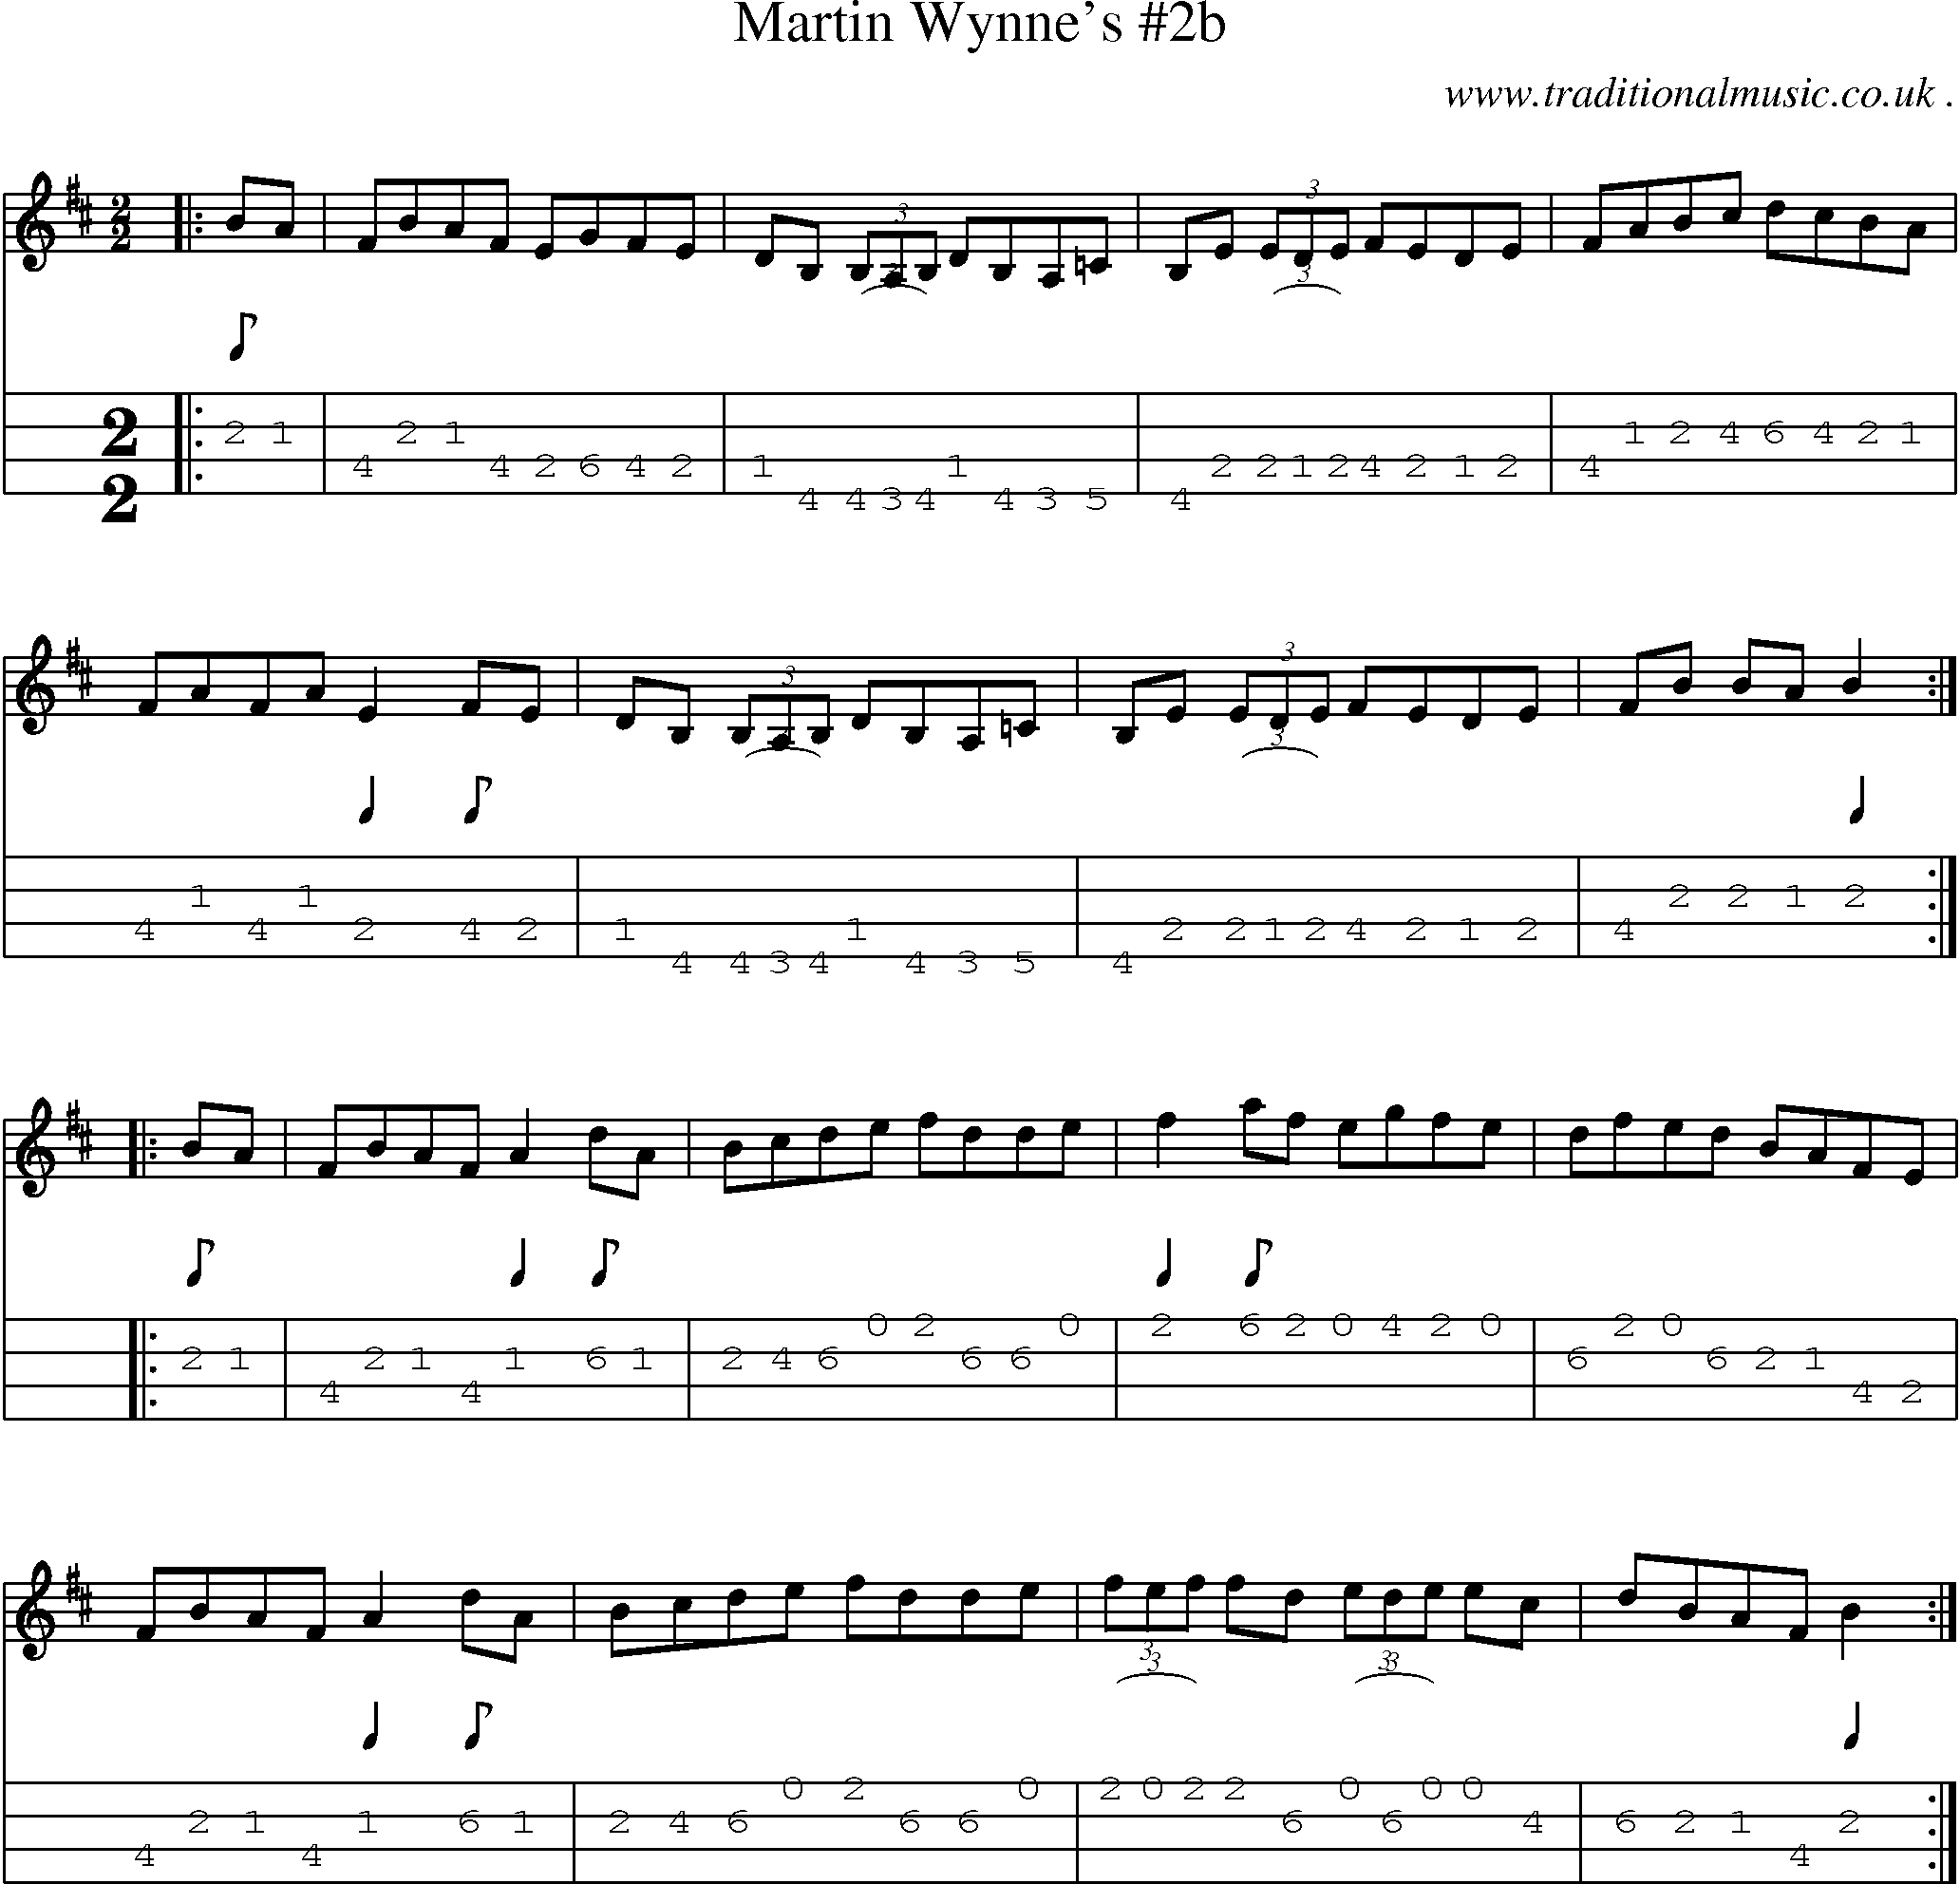 Sheet-Music and Mandolin Tabs for Martin Wynnes 2b